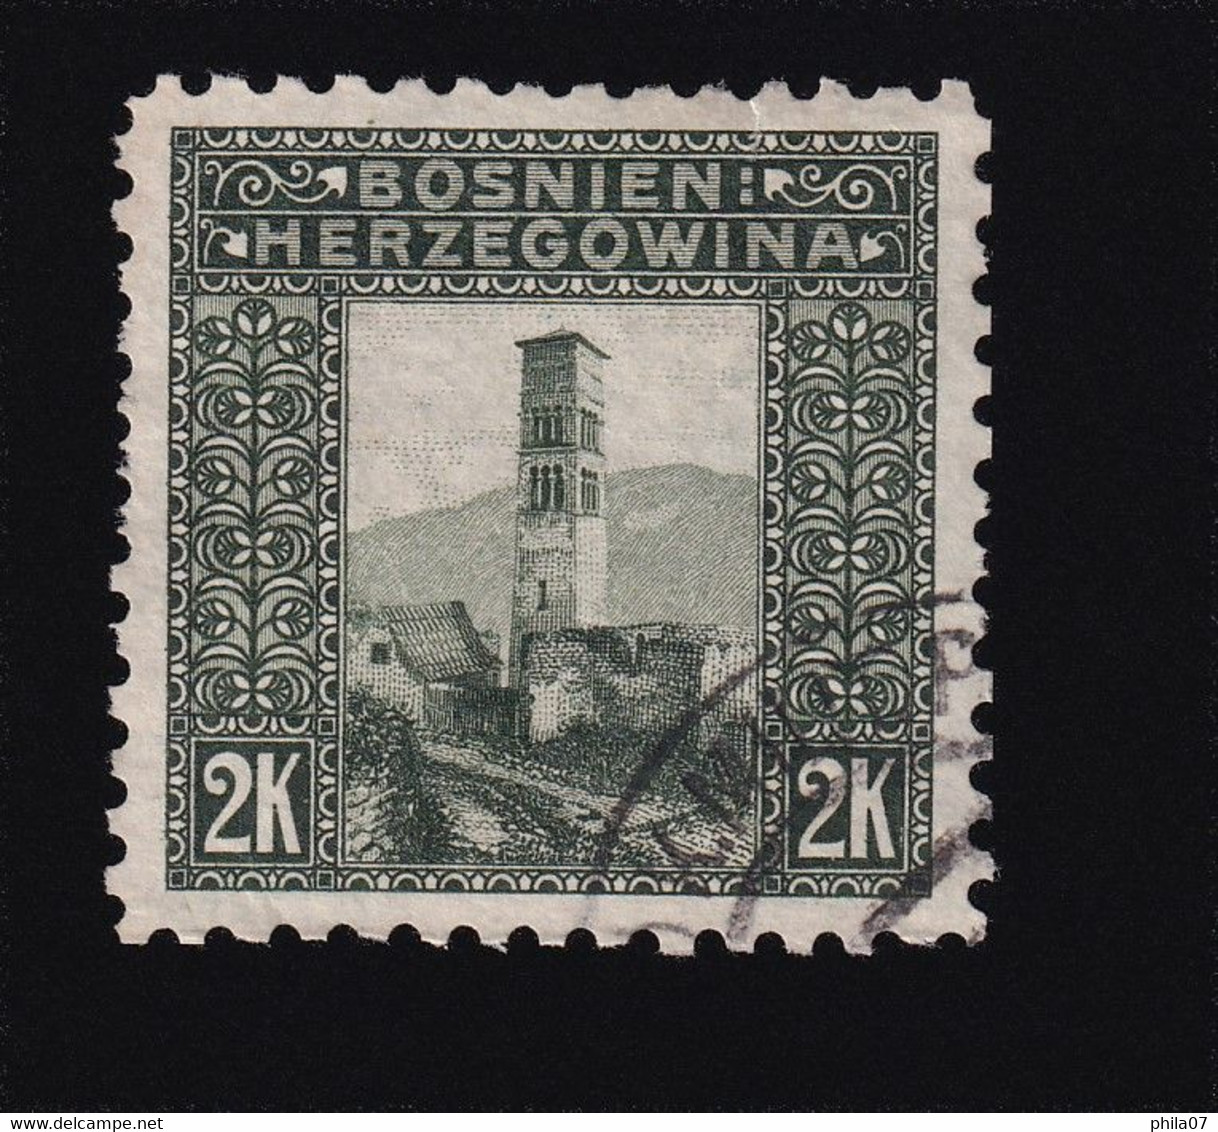 BOSNIA AND HERZEGOVINA - Landscape Stamp 2 Krune, Perforation 9 ½, Stamp Cancelled - Bosnia And Herzegovina